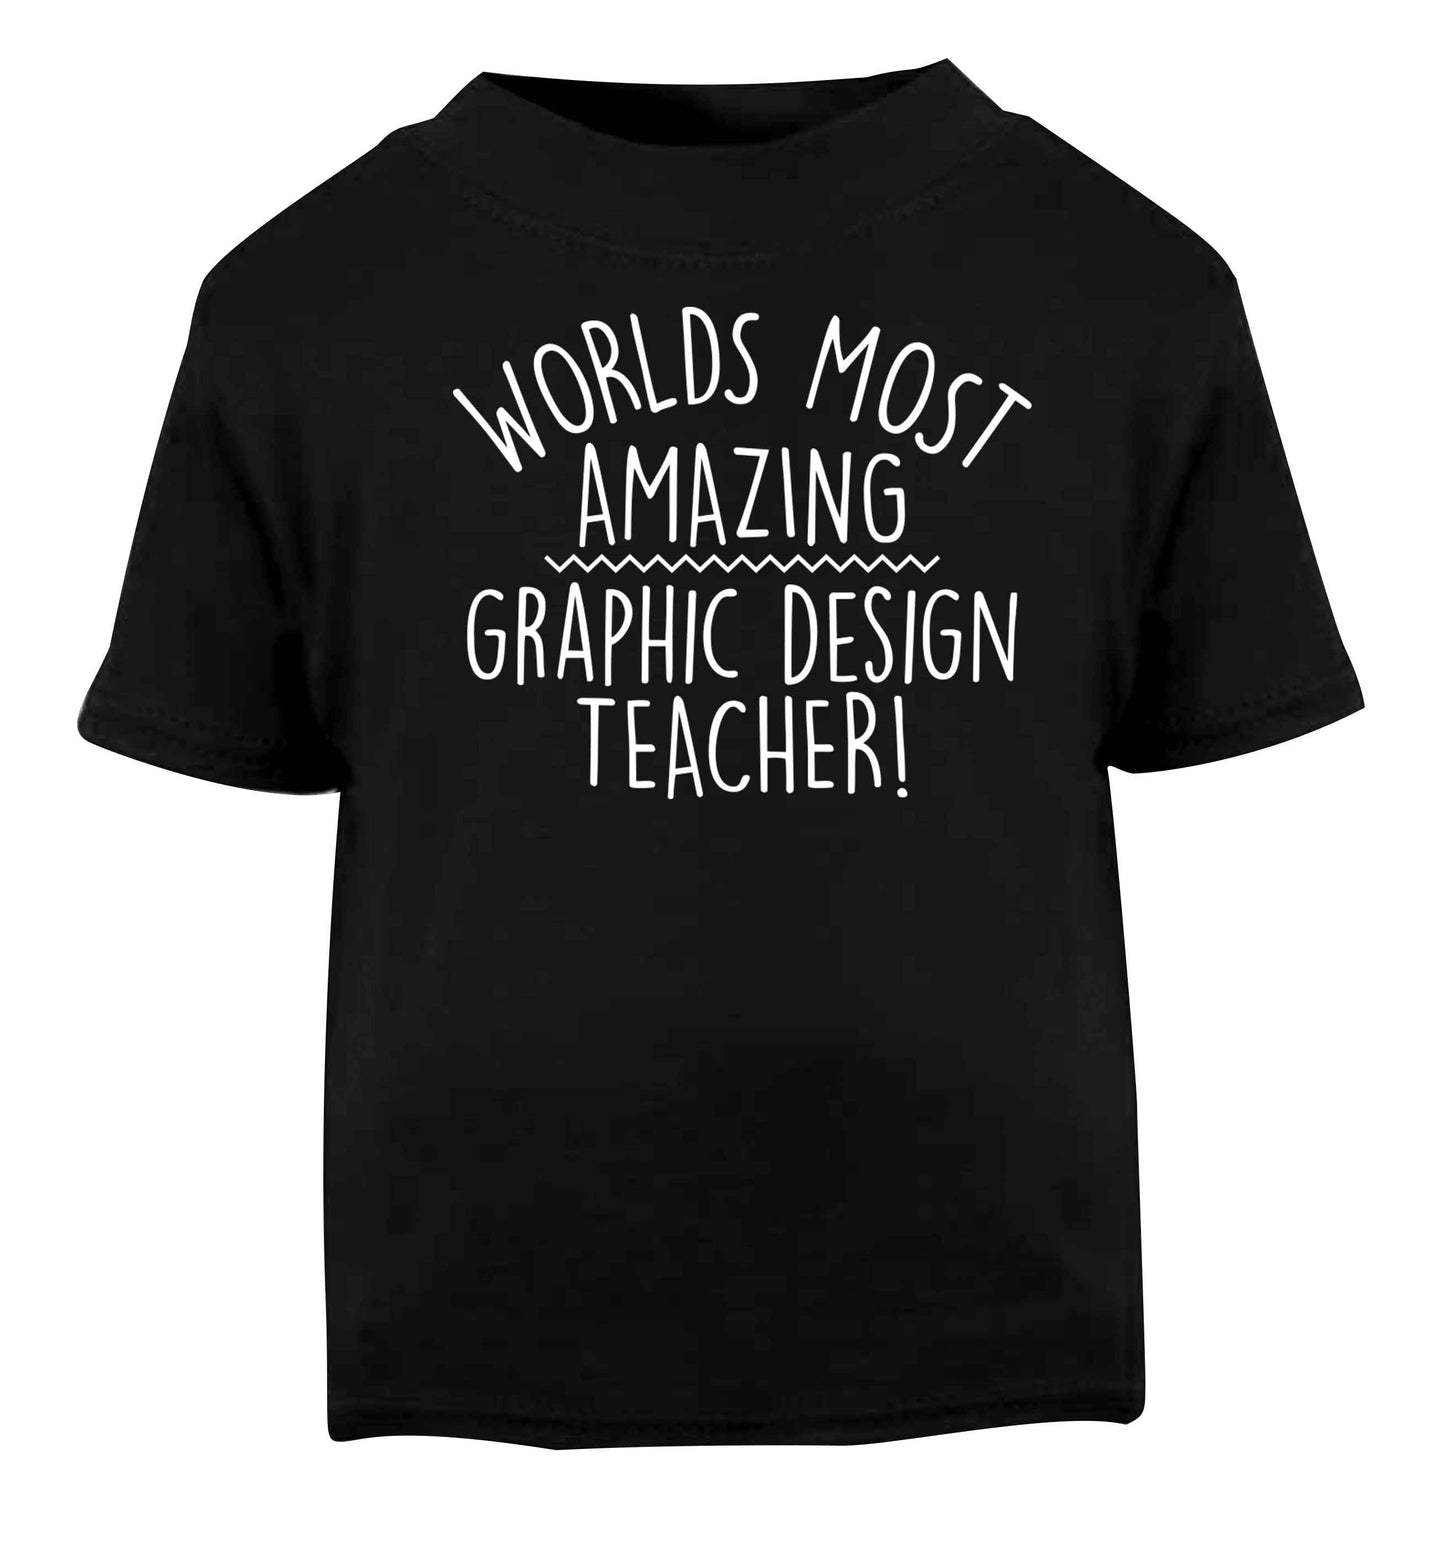 Worlds most amazing graphic design teacher Black baby toddler Tshirt 2 years